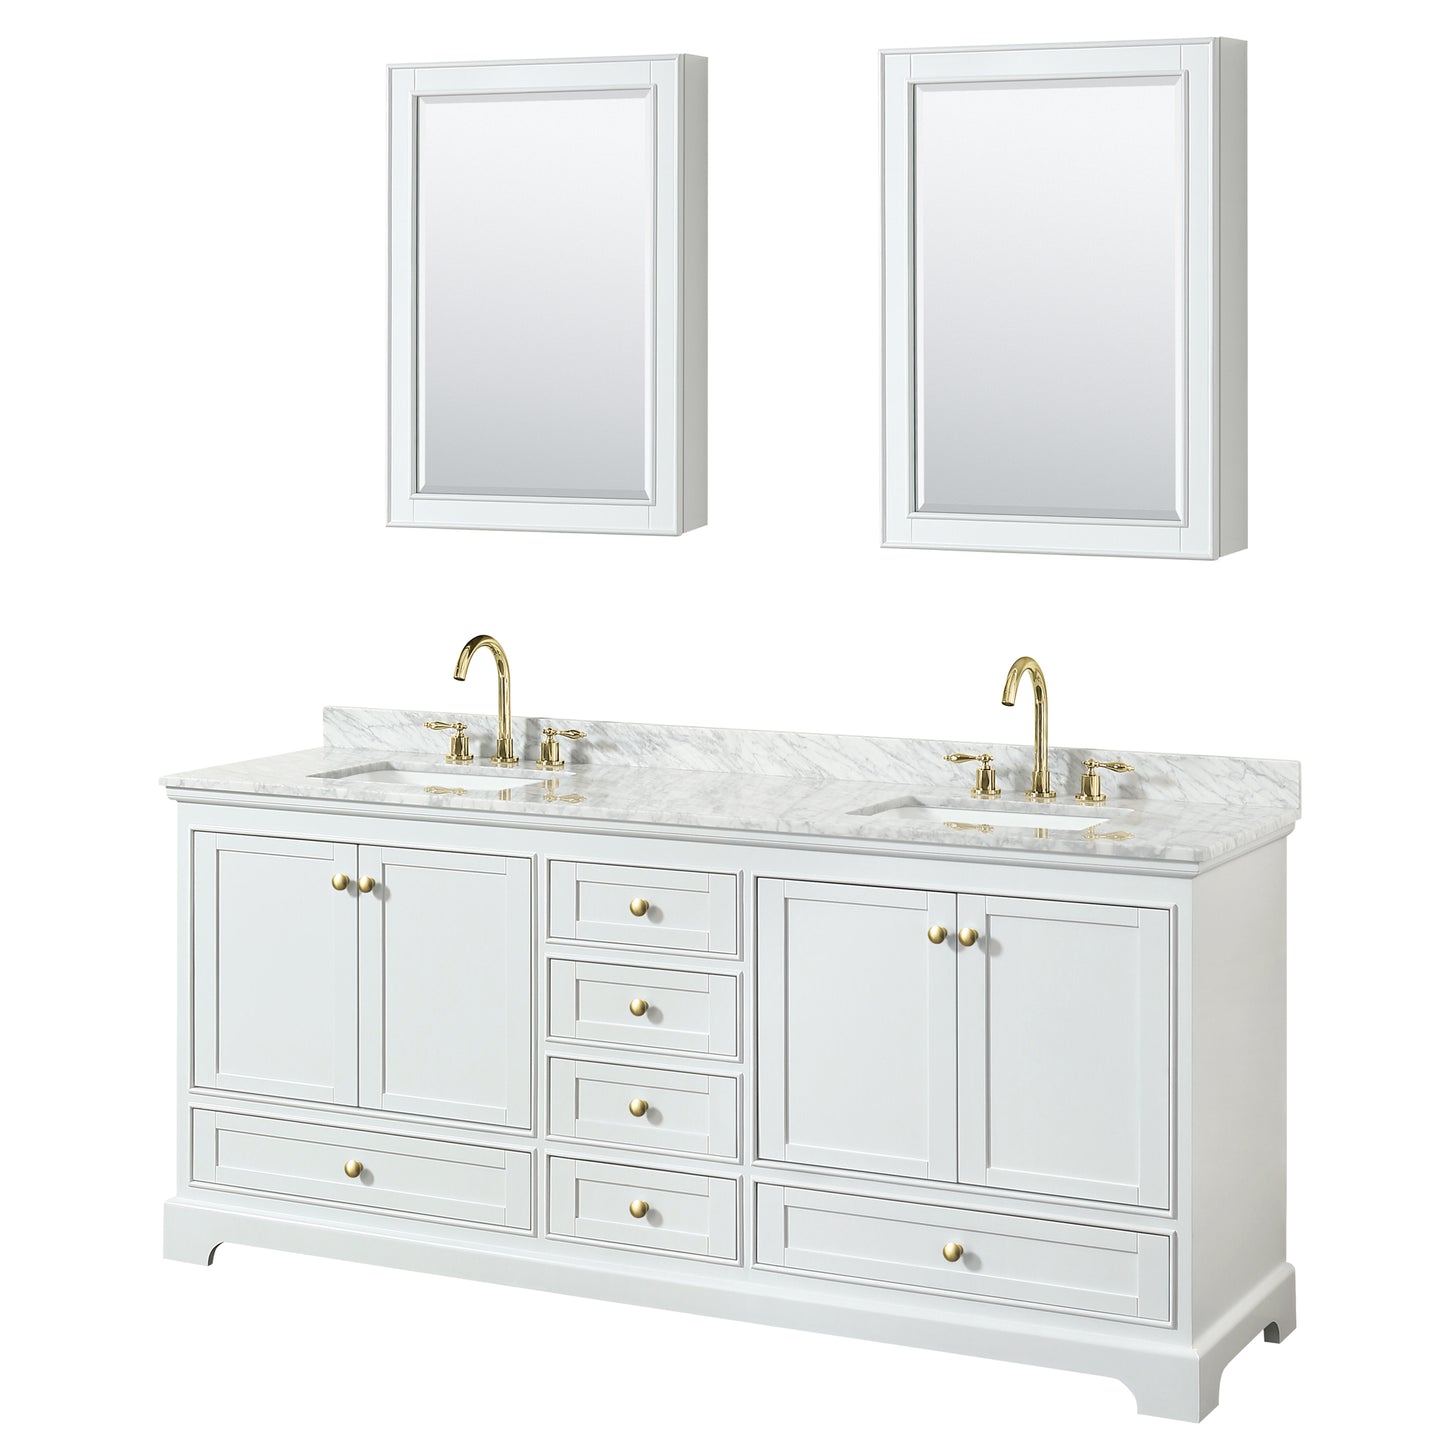 Wyndham Collection Deborah 80 Inch Double Bathroom Vanity in White, White Carrara Marble Countertop, Undermount Square Sinks, Brushed Gold Trim - Luxe Bathroom Vanities